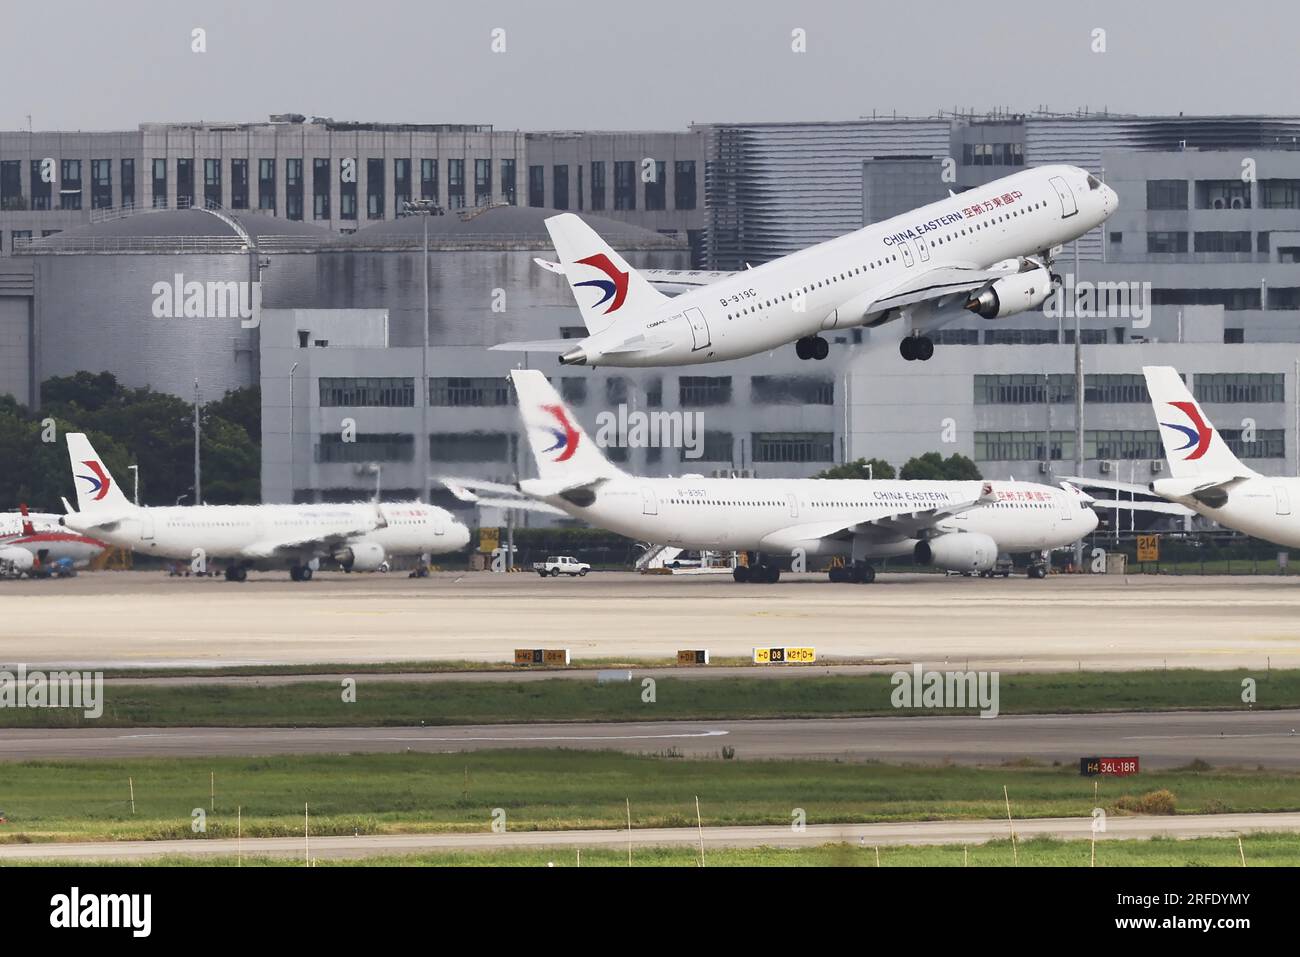 **CINA CONTINENTALE, HONG KONG, MACAO E TAIWAN FUORI** il secondo aereo C919 di China Eastern Airlines decolla dall'Aeroporto Internazionale di Shanghai Hongqiao Foto Stock